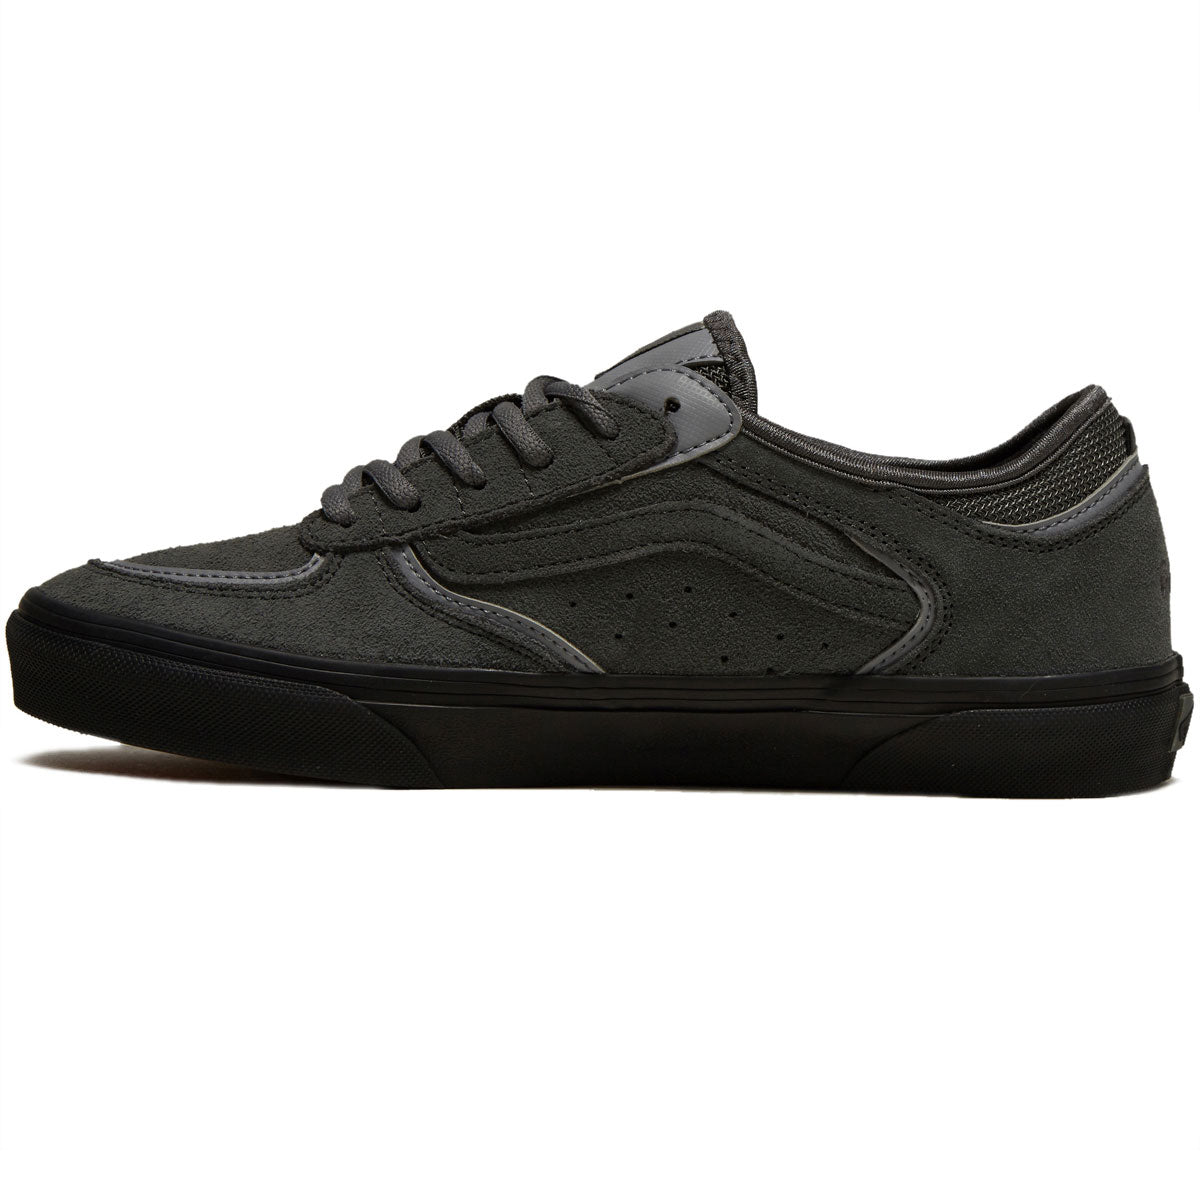 Vans Skate Rowley Shoes - Suede Charcoal/Black image 2